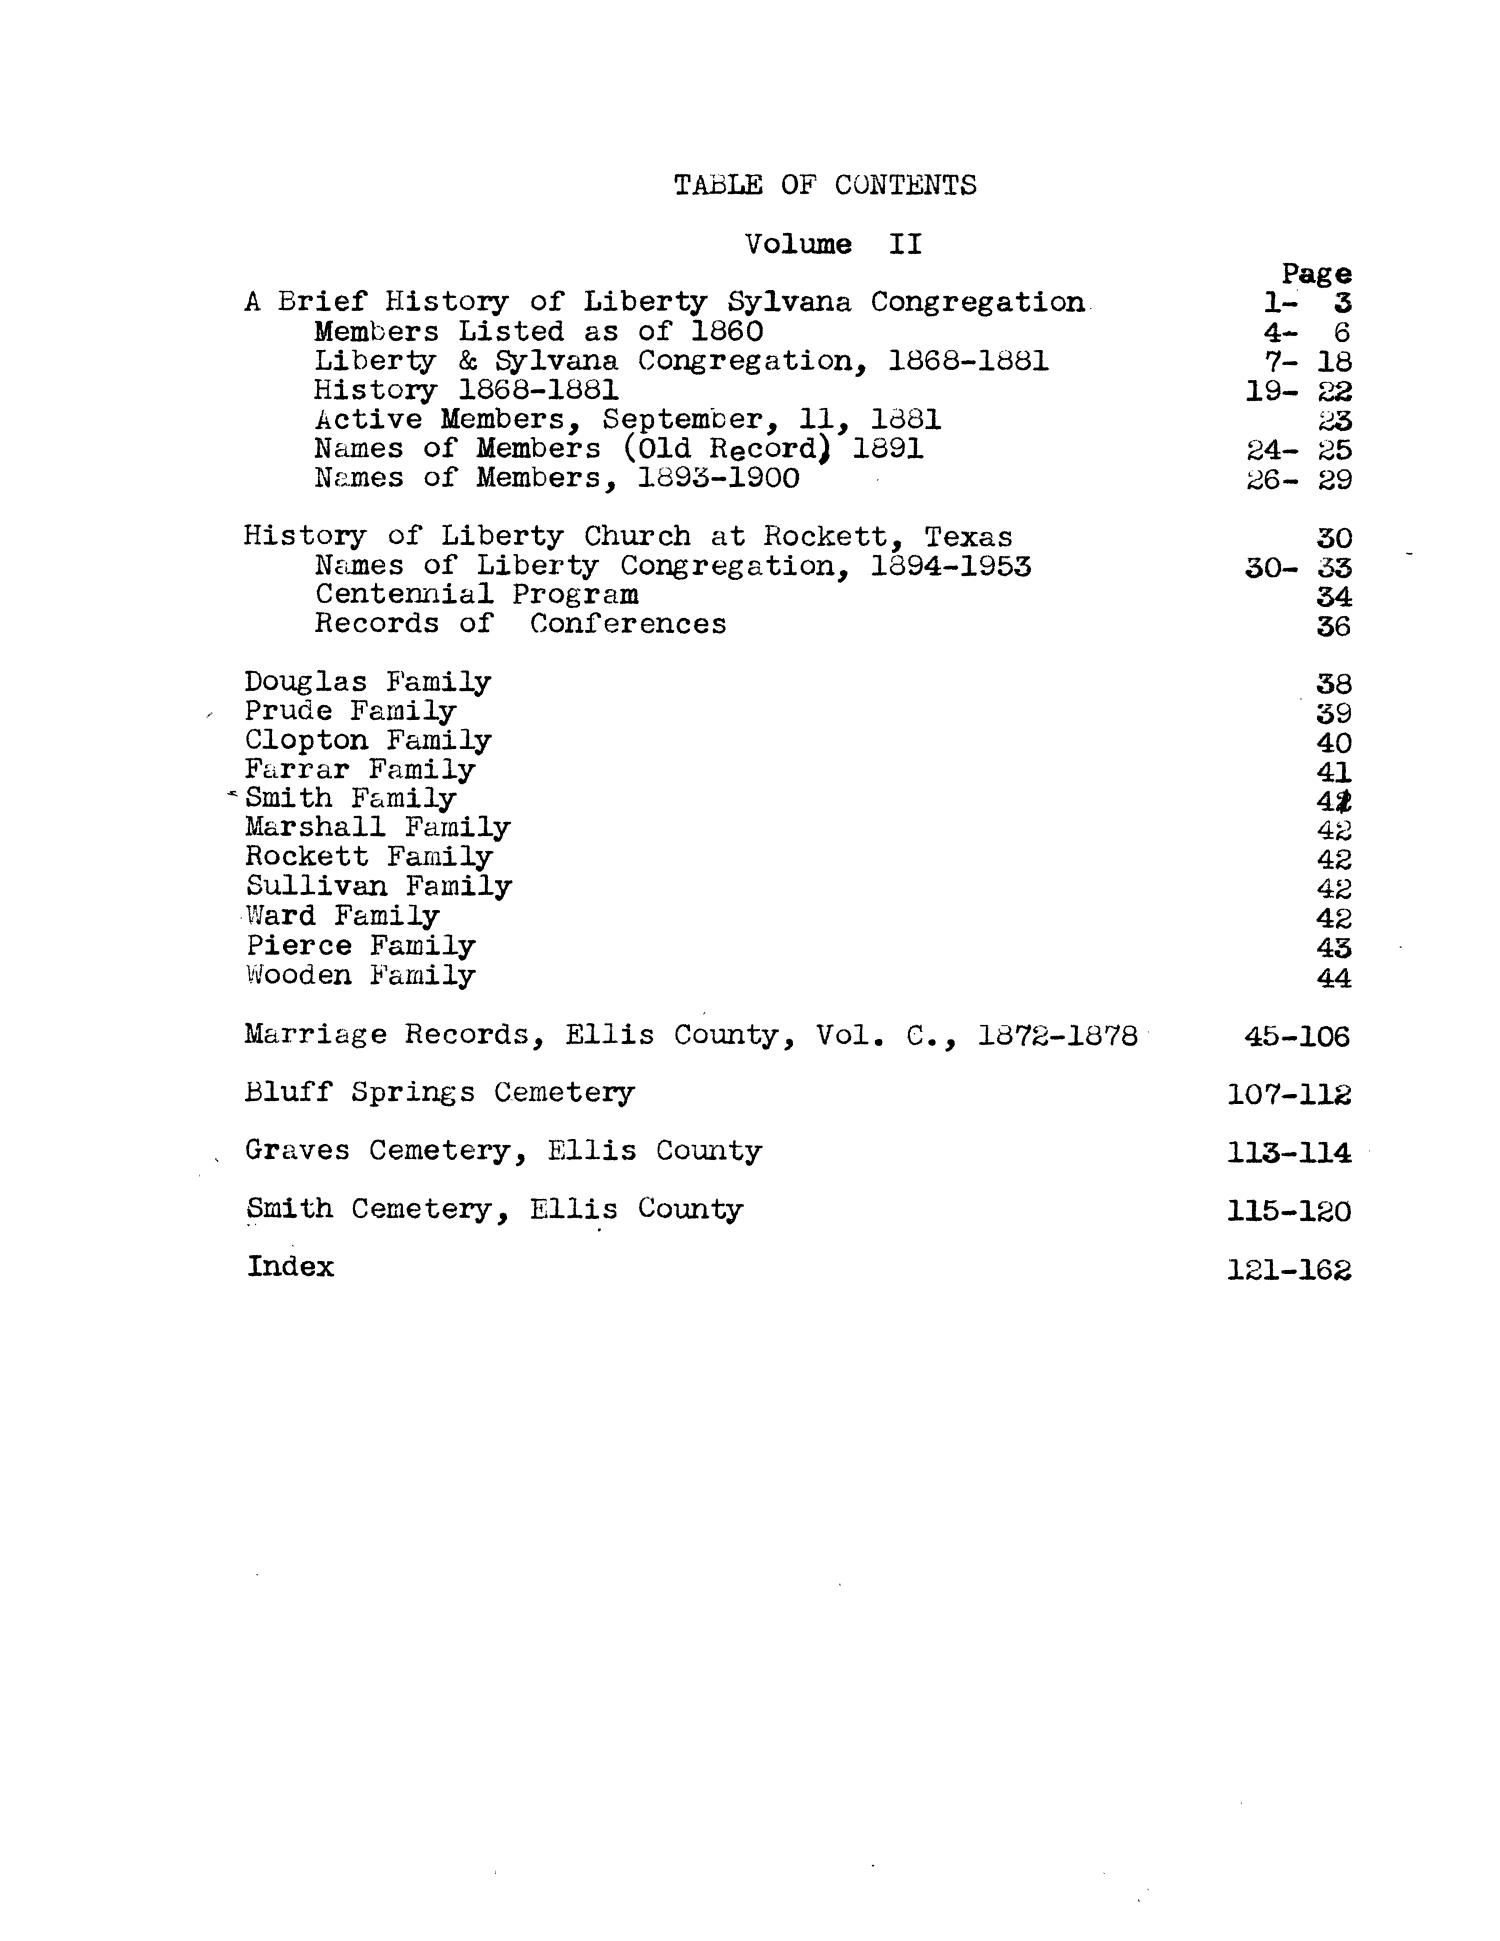 [Texas Genealogical Records, Ellis County: Index]
                                                
                                                    2
                                                